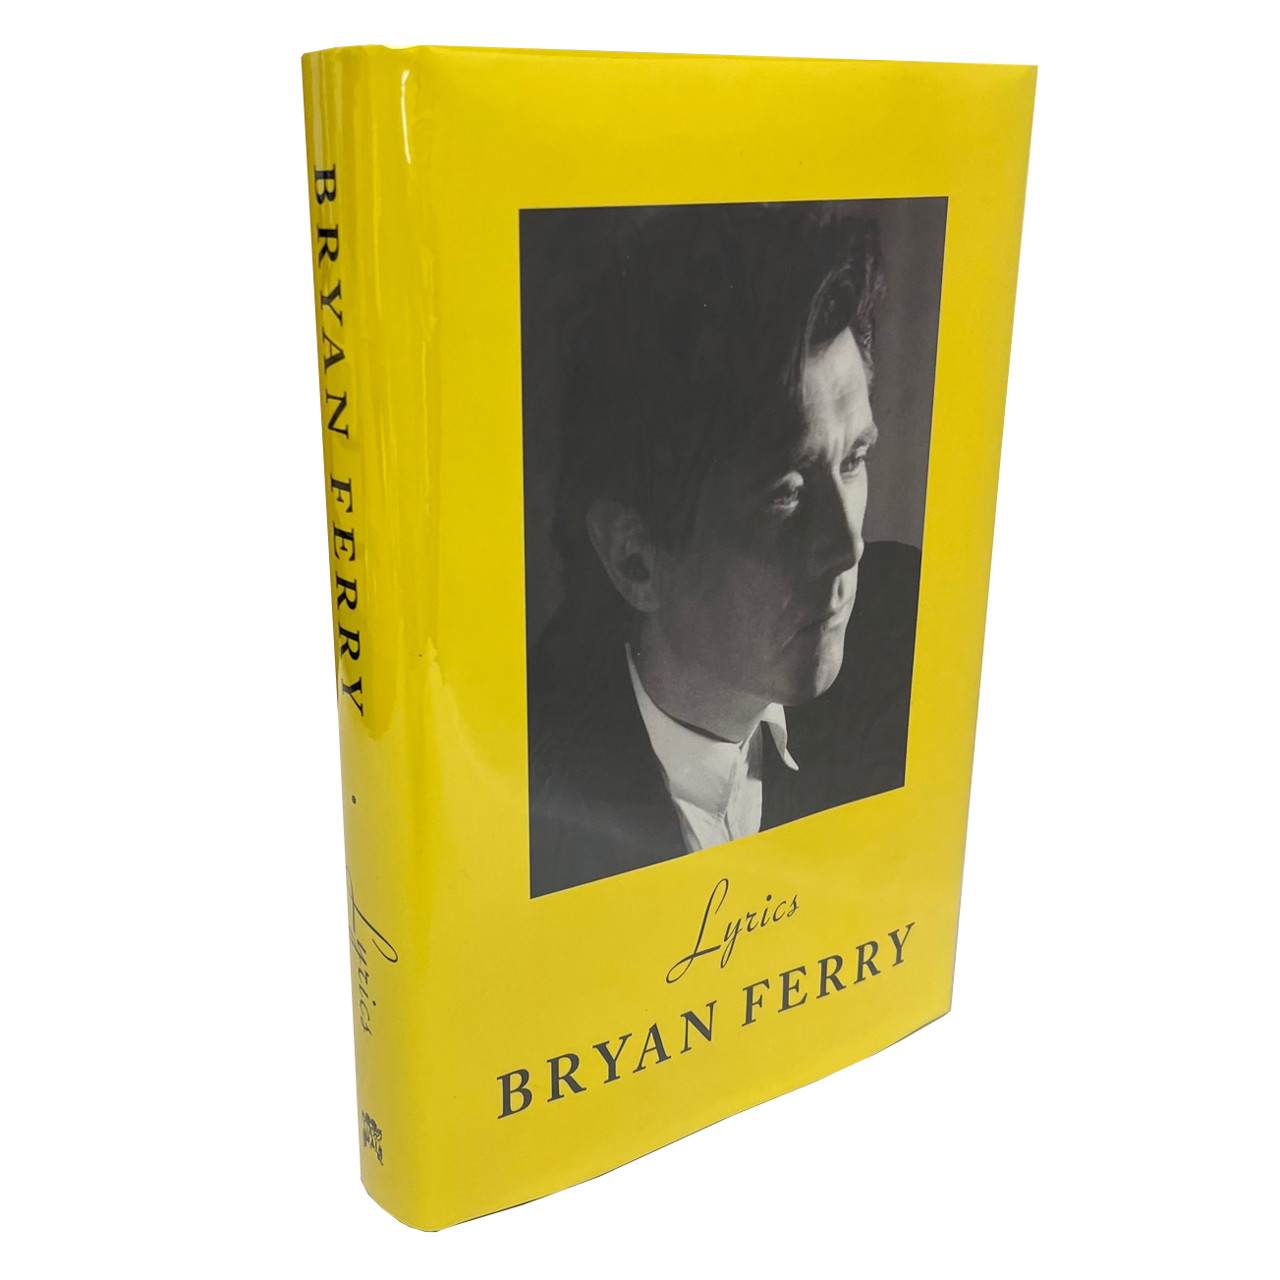 Bryan Ferry "Lyrics" UK Signed First Edition w/COA [Very Fine]